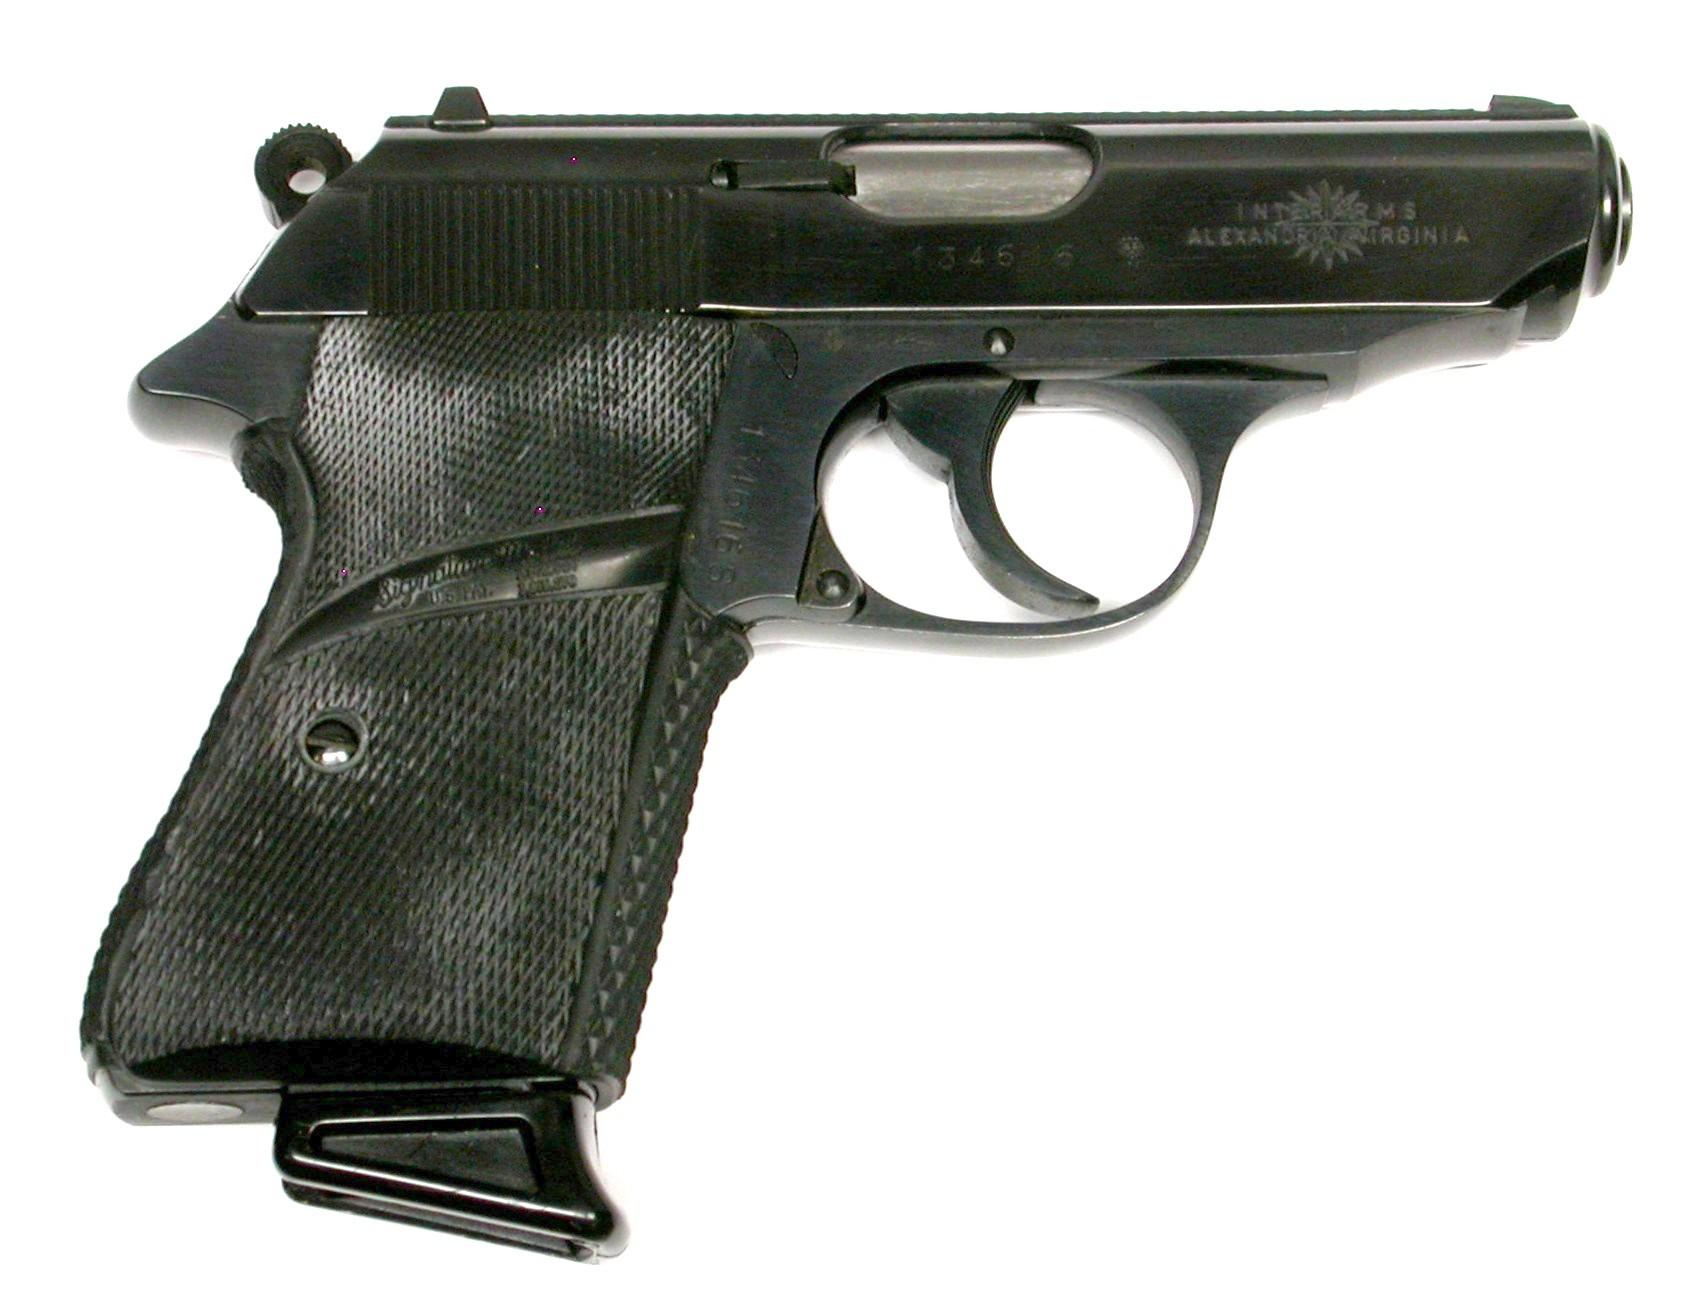 German Walther PPK/S .22 LR Semi-Automatic Pistol - FFL 134616S (PTM1)